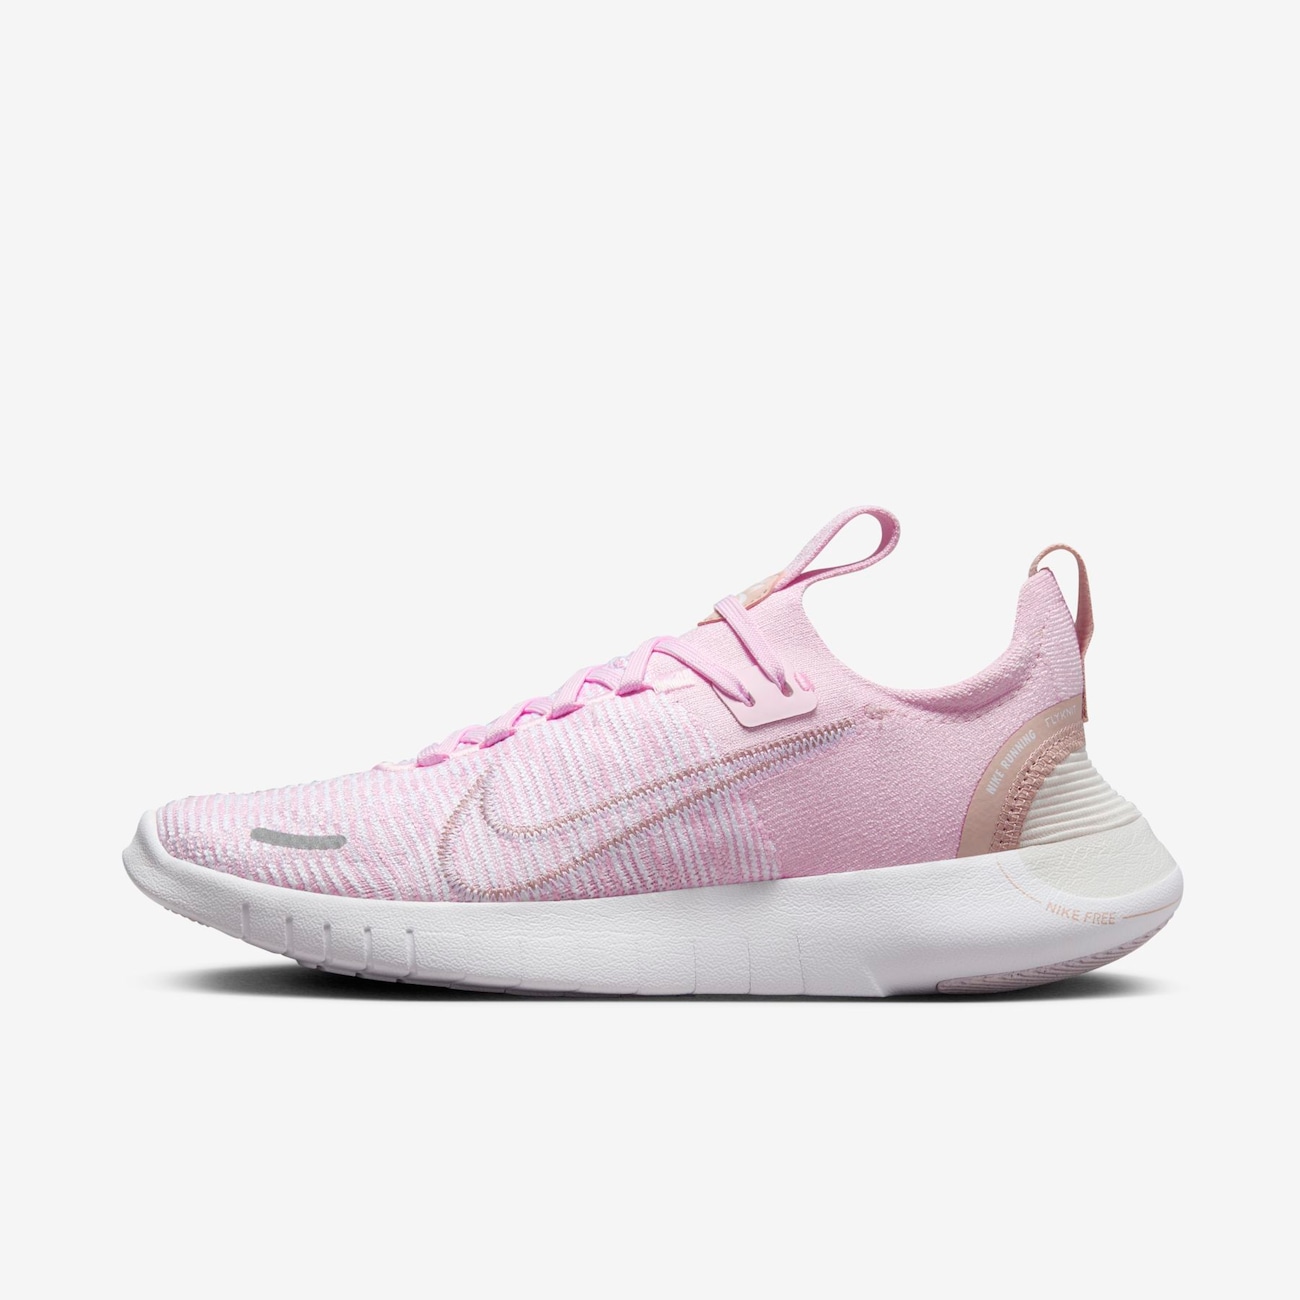 Nike Free RN NN hardloopschoenen voor dames (straat) - Roze